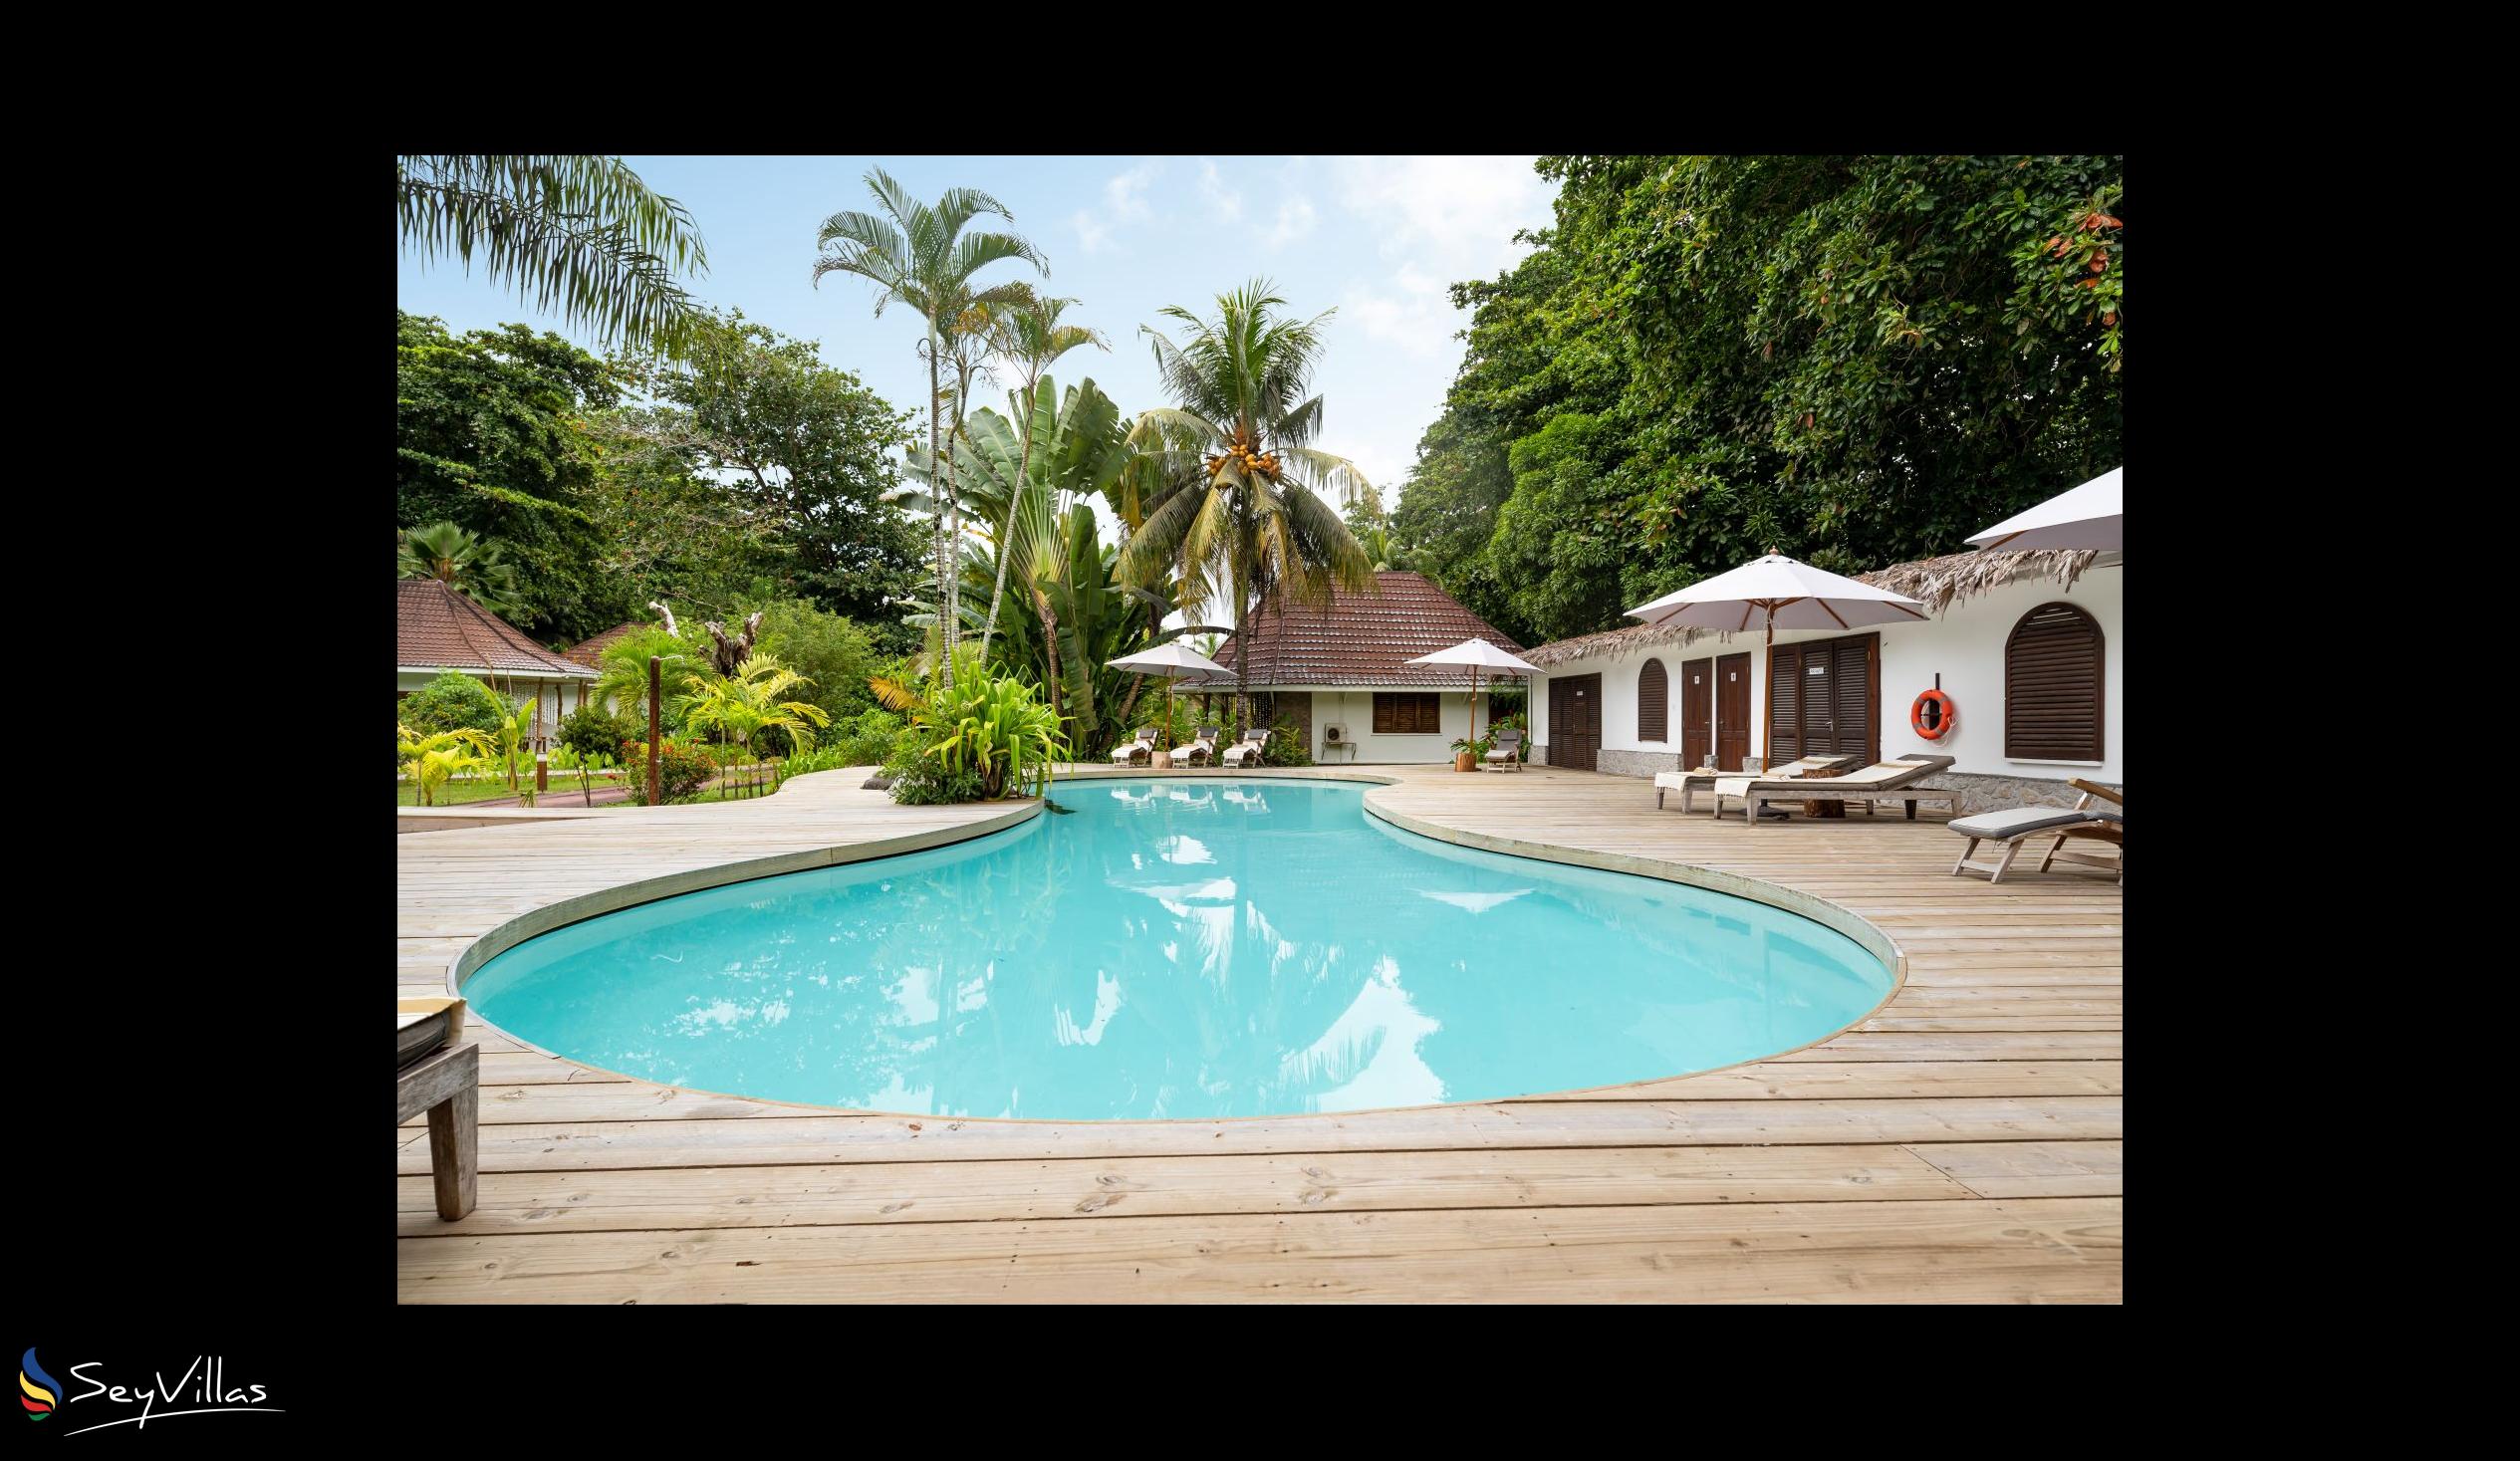 Photo 4: Bliss Hotel Praslin - Outdoor area - Praslin (Seychelles)